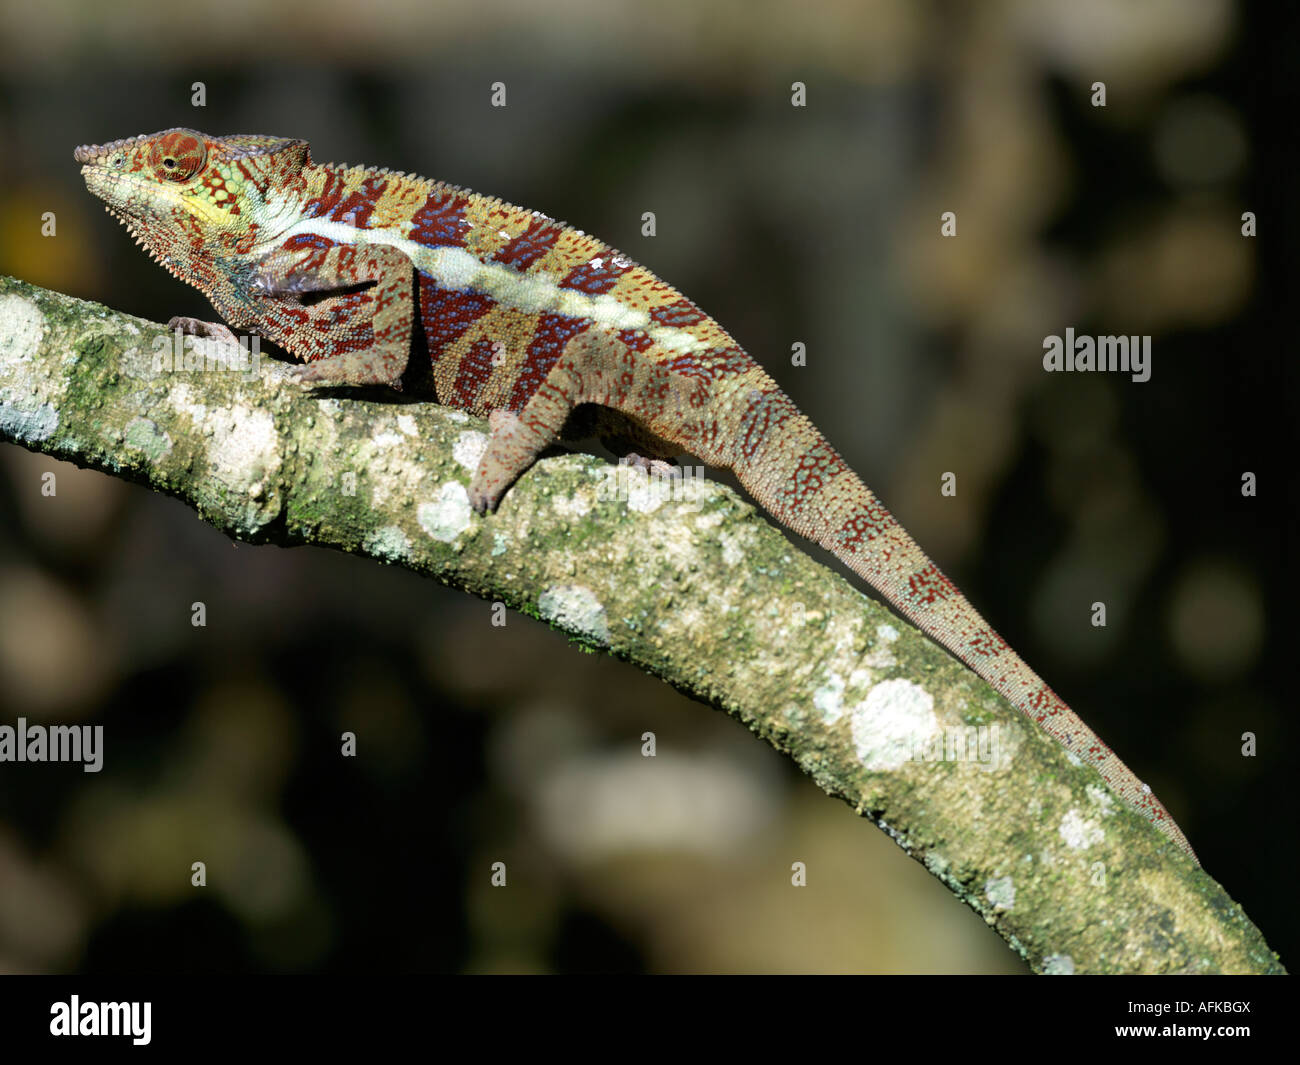 A colourful Chameleon. Stock Photo